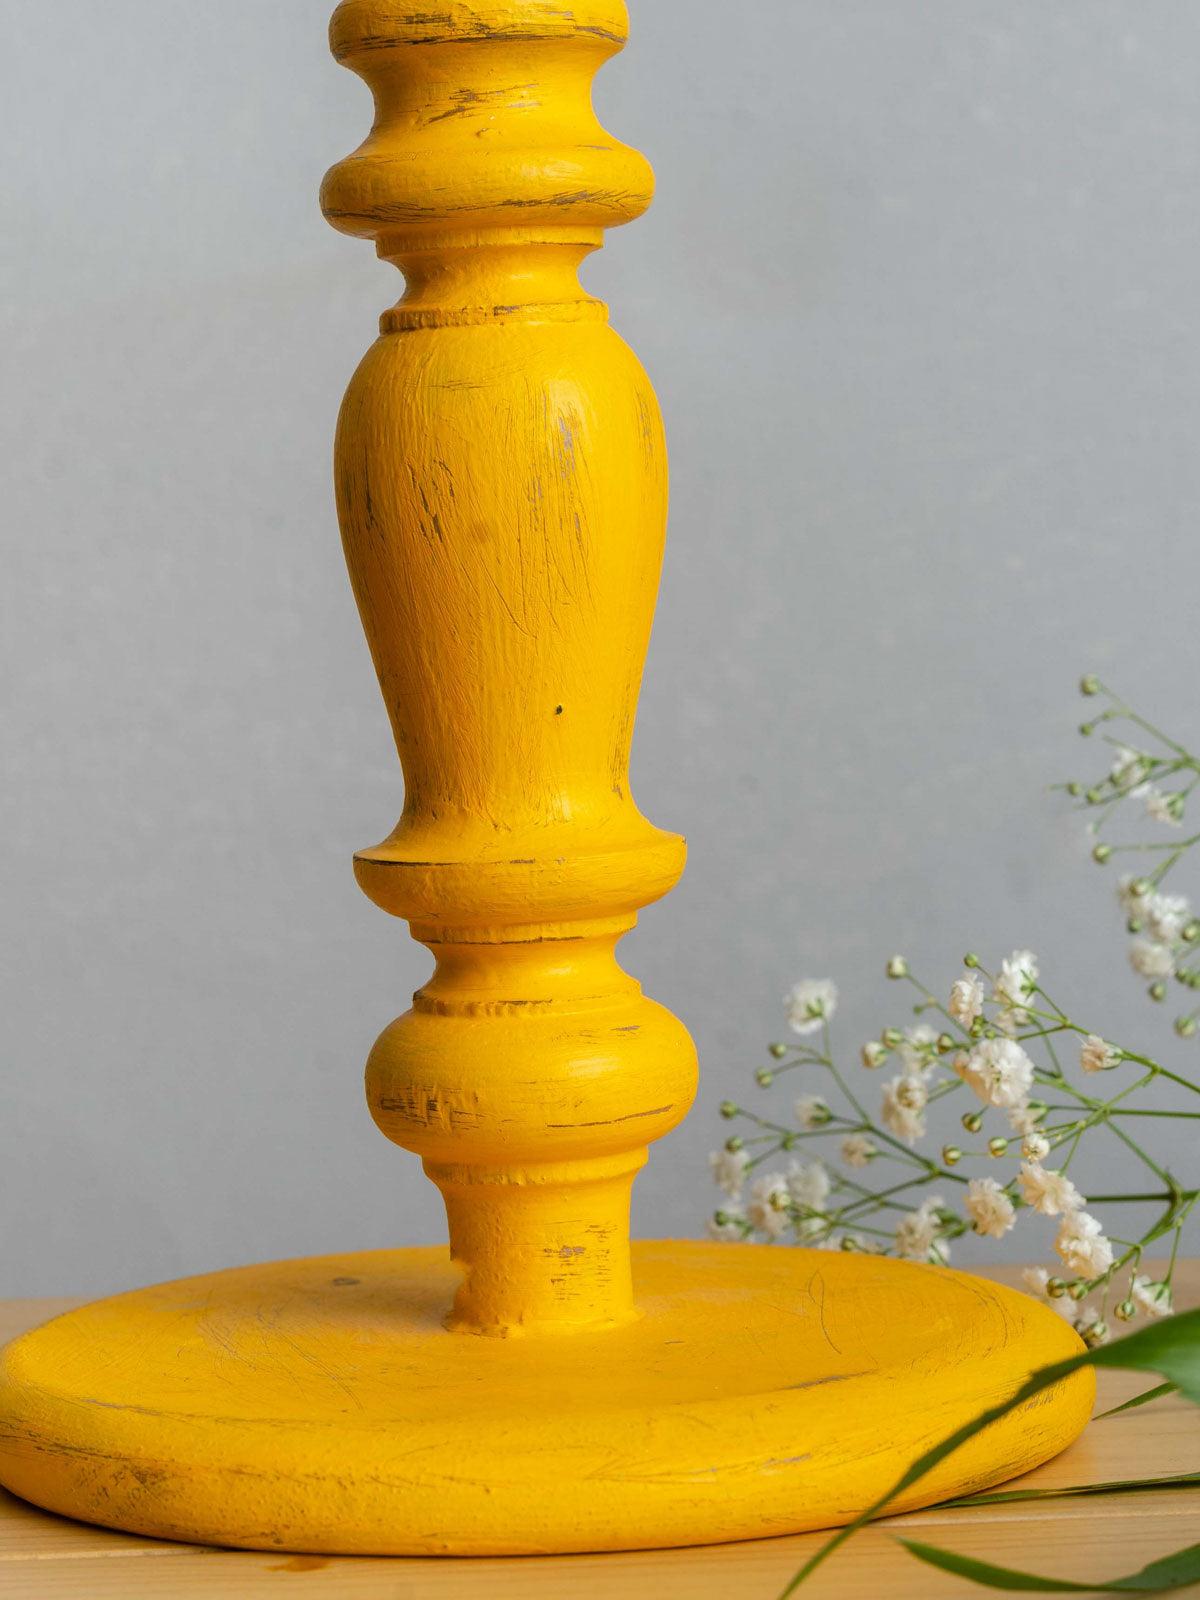 Minimalistic Candle Holder - Yellow